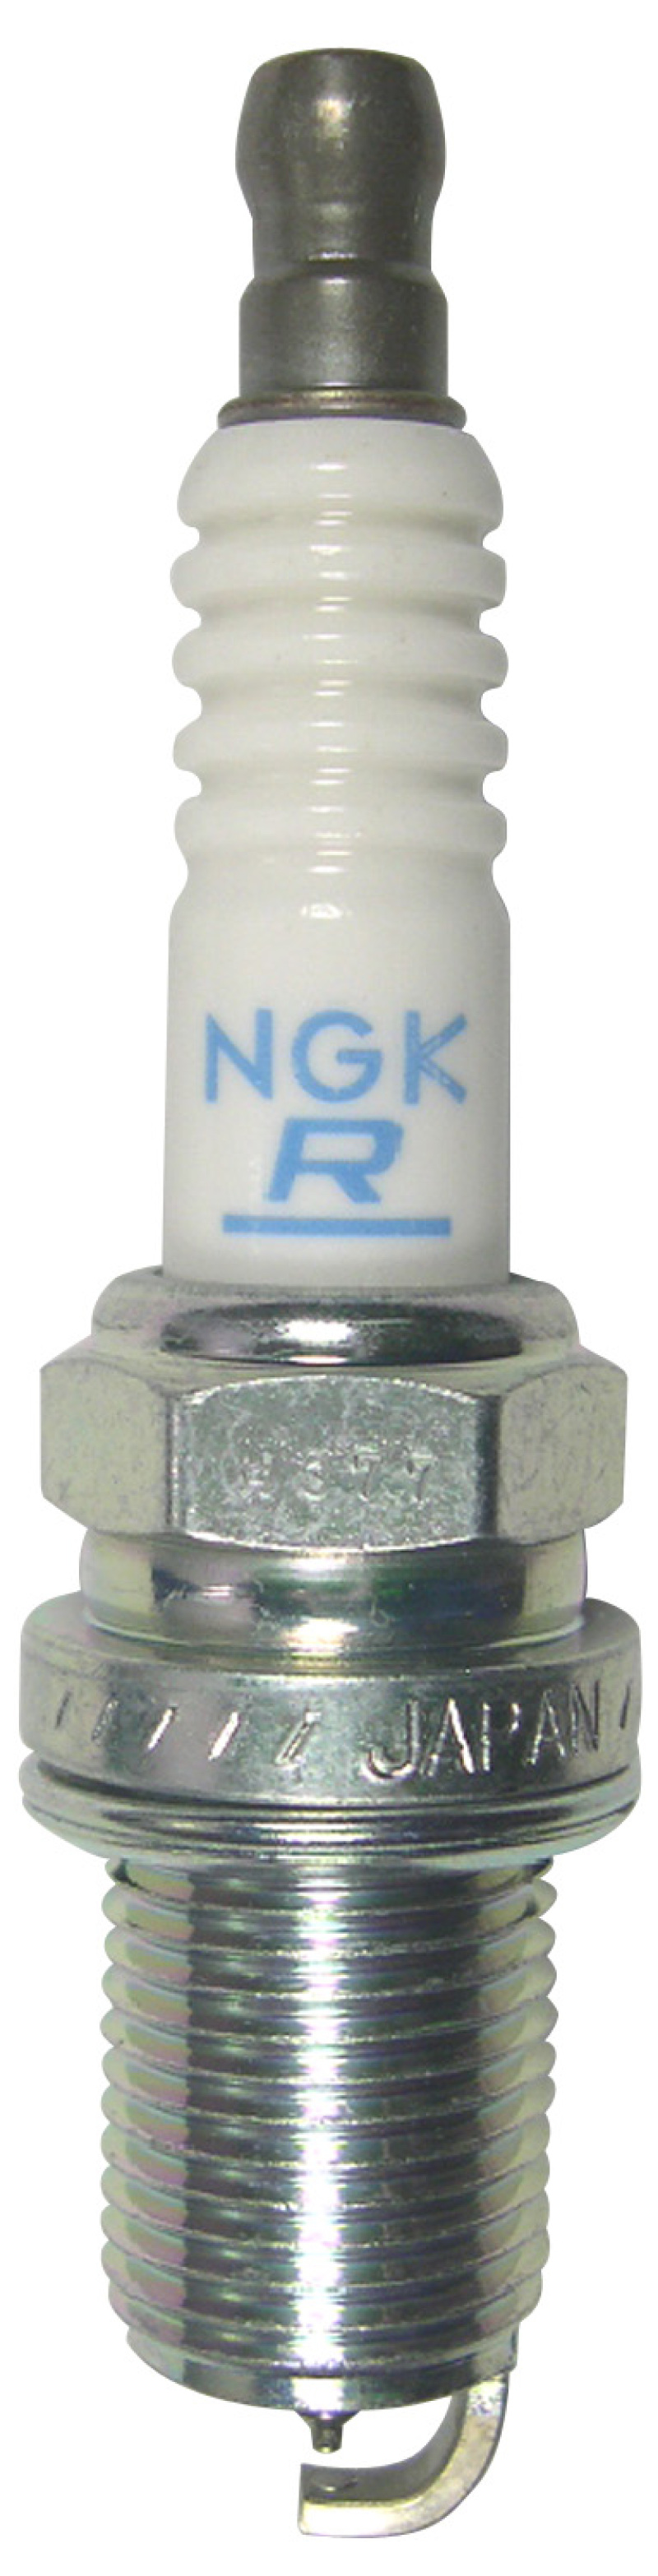 NGK Multi-Ground Spark Plug Box of 4 (PPFR6T-10G) - 5542